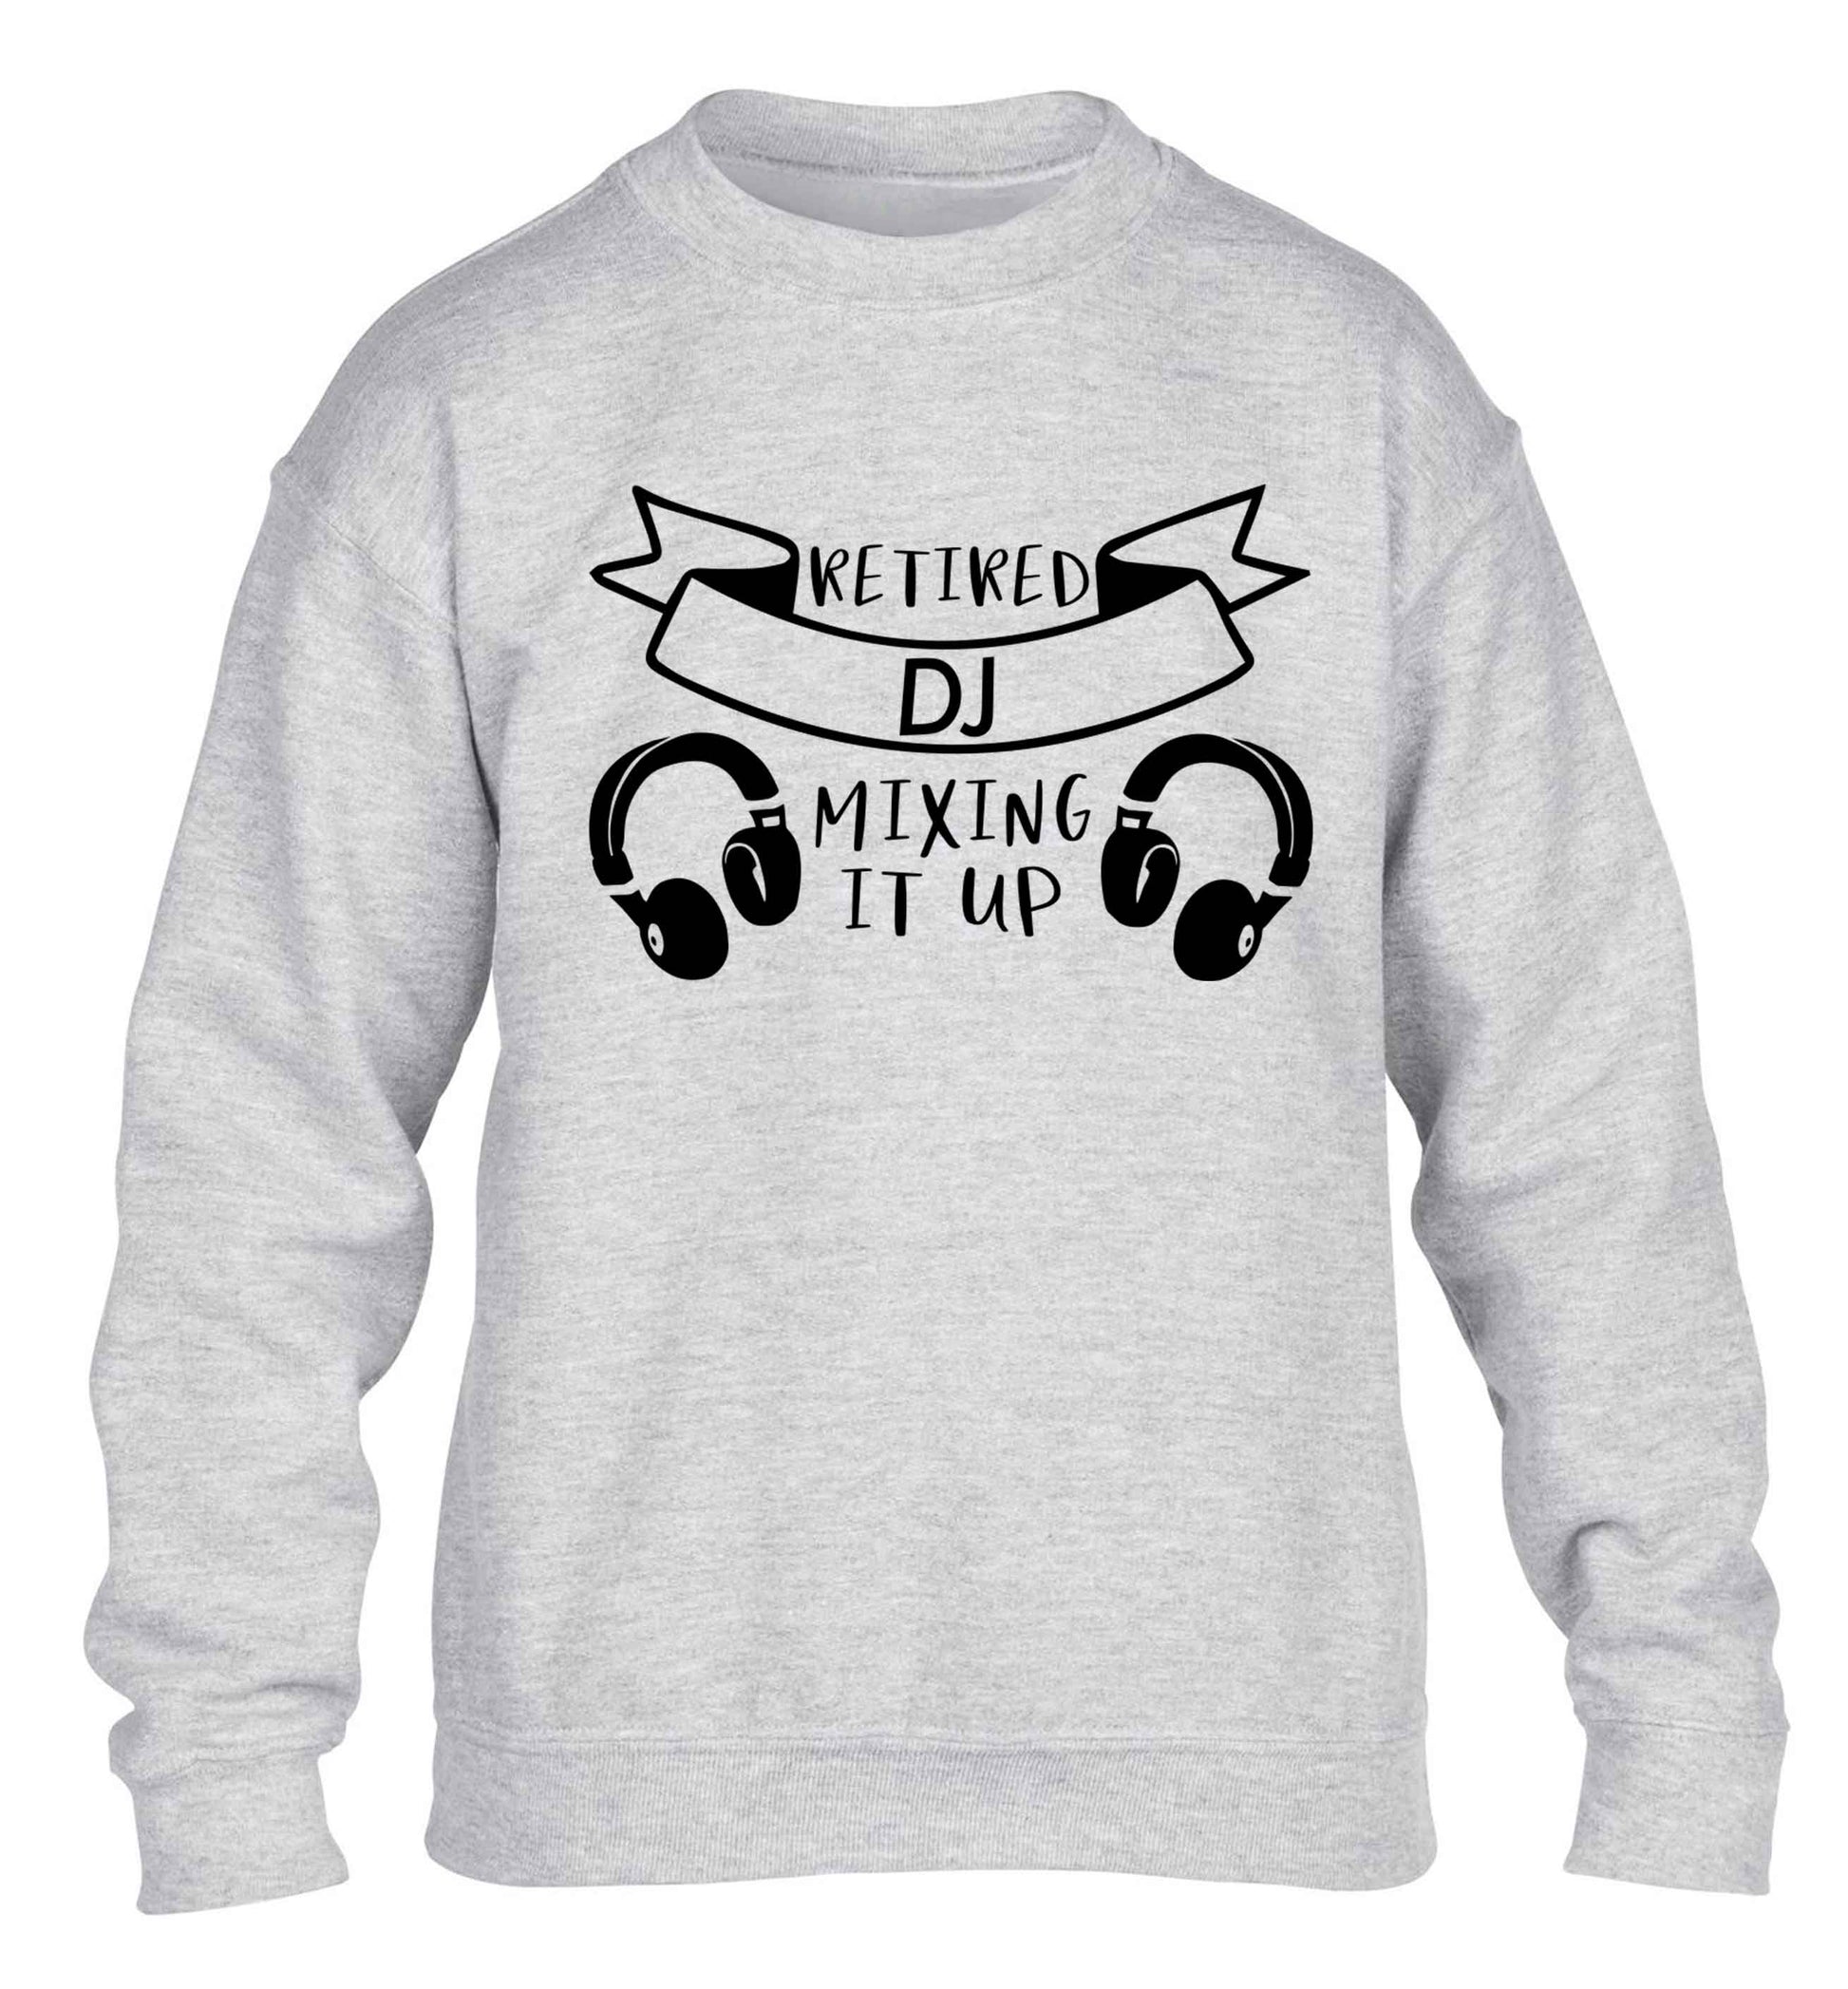 Retired DJ mixing it up children's grey sweater 12-13 Years